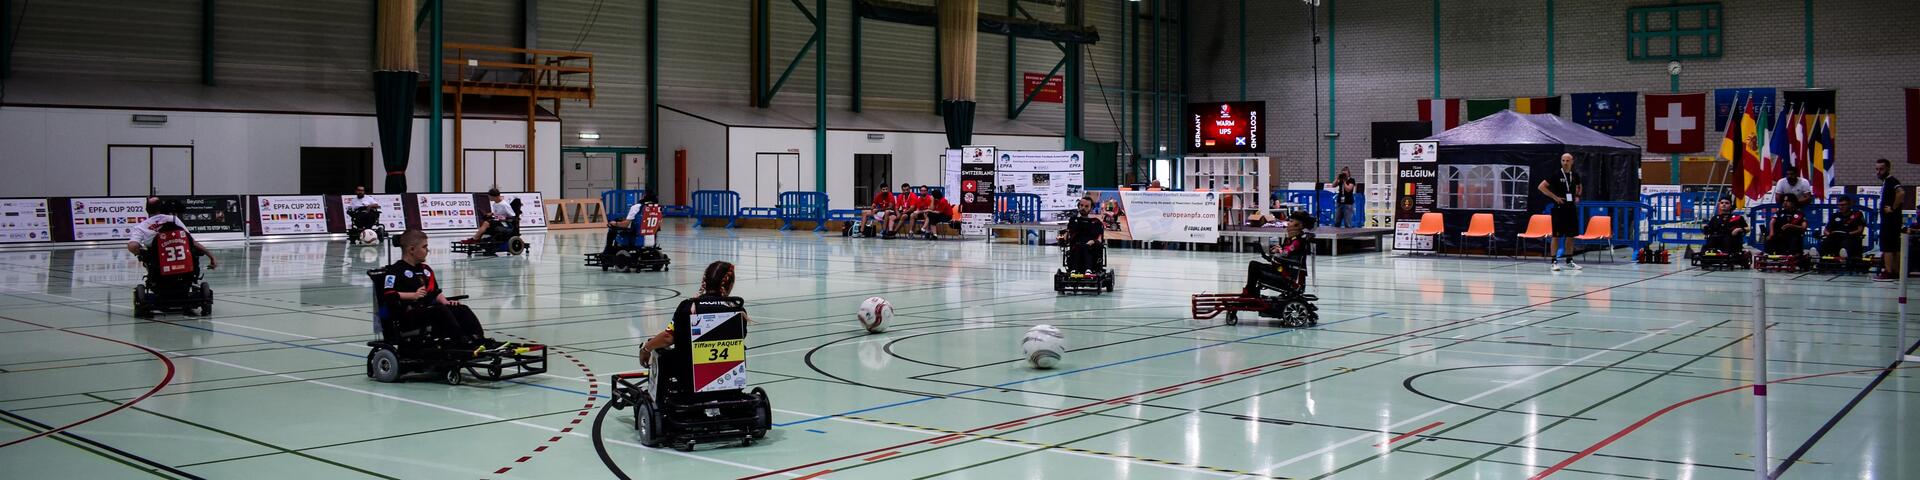 Kipsta, fier d'équiper l'équipe nationale belge de foot fauteuil 